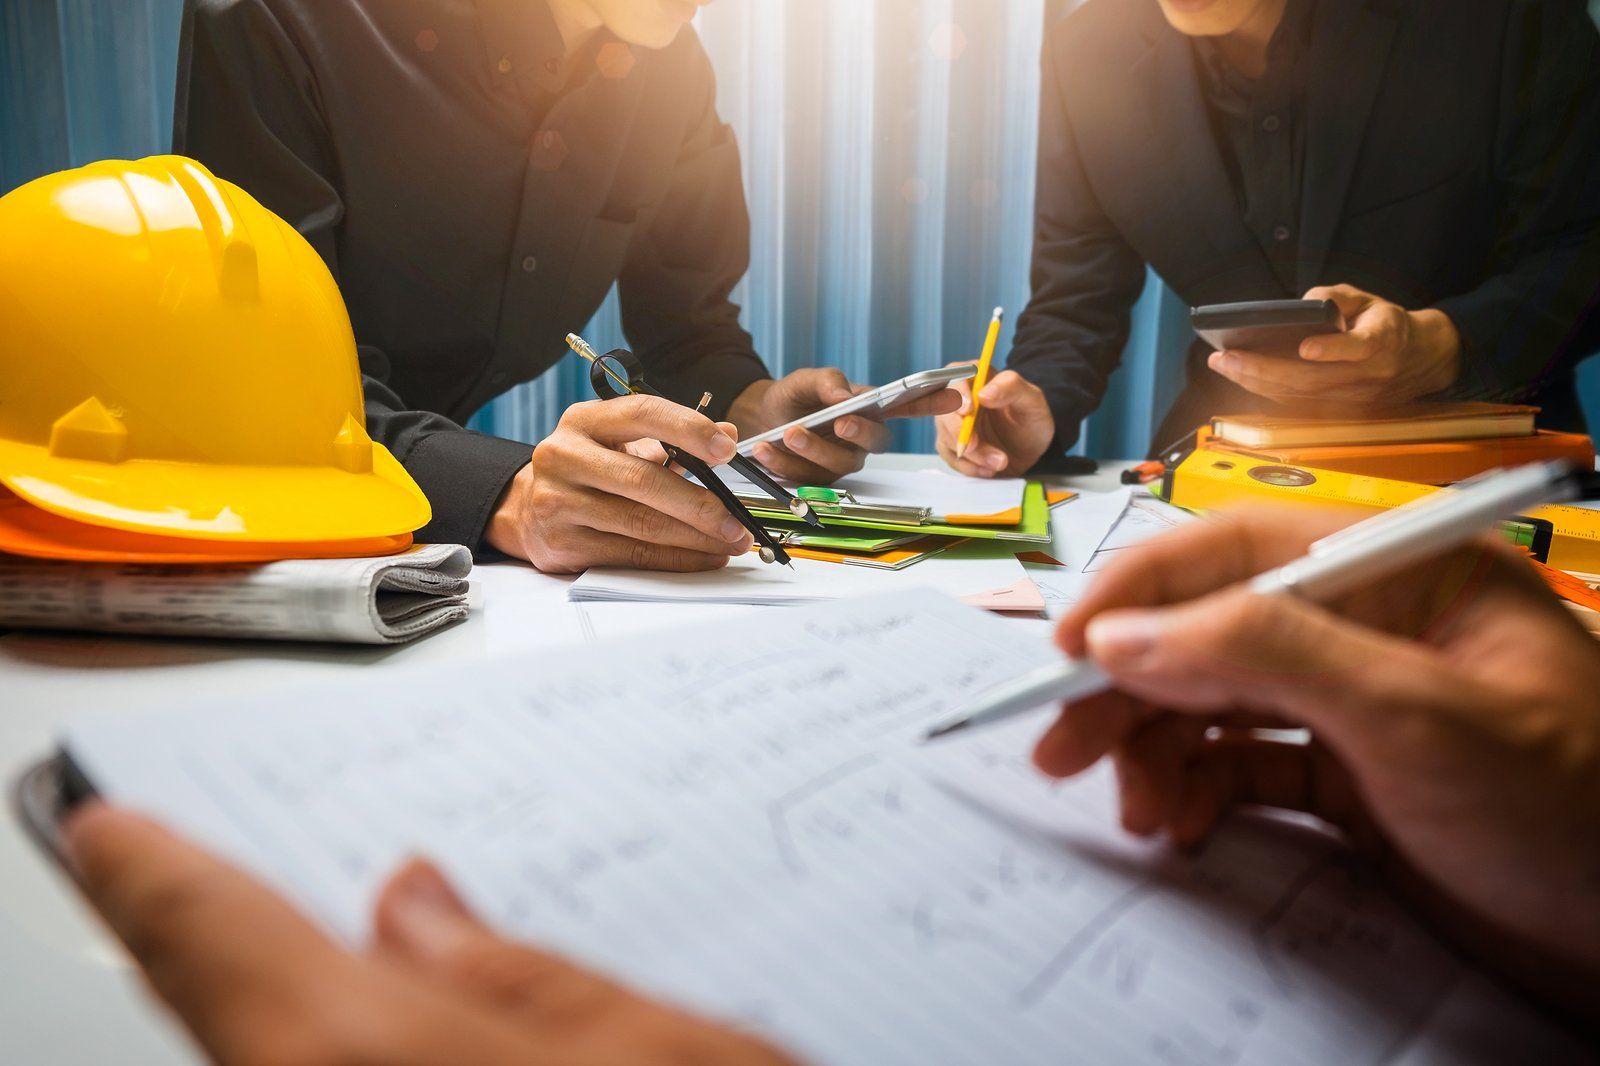 construction project management software